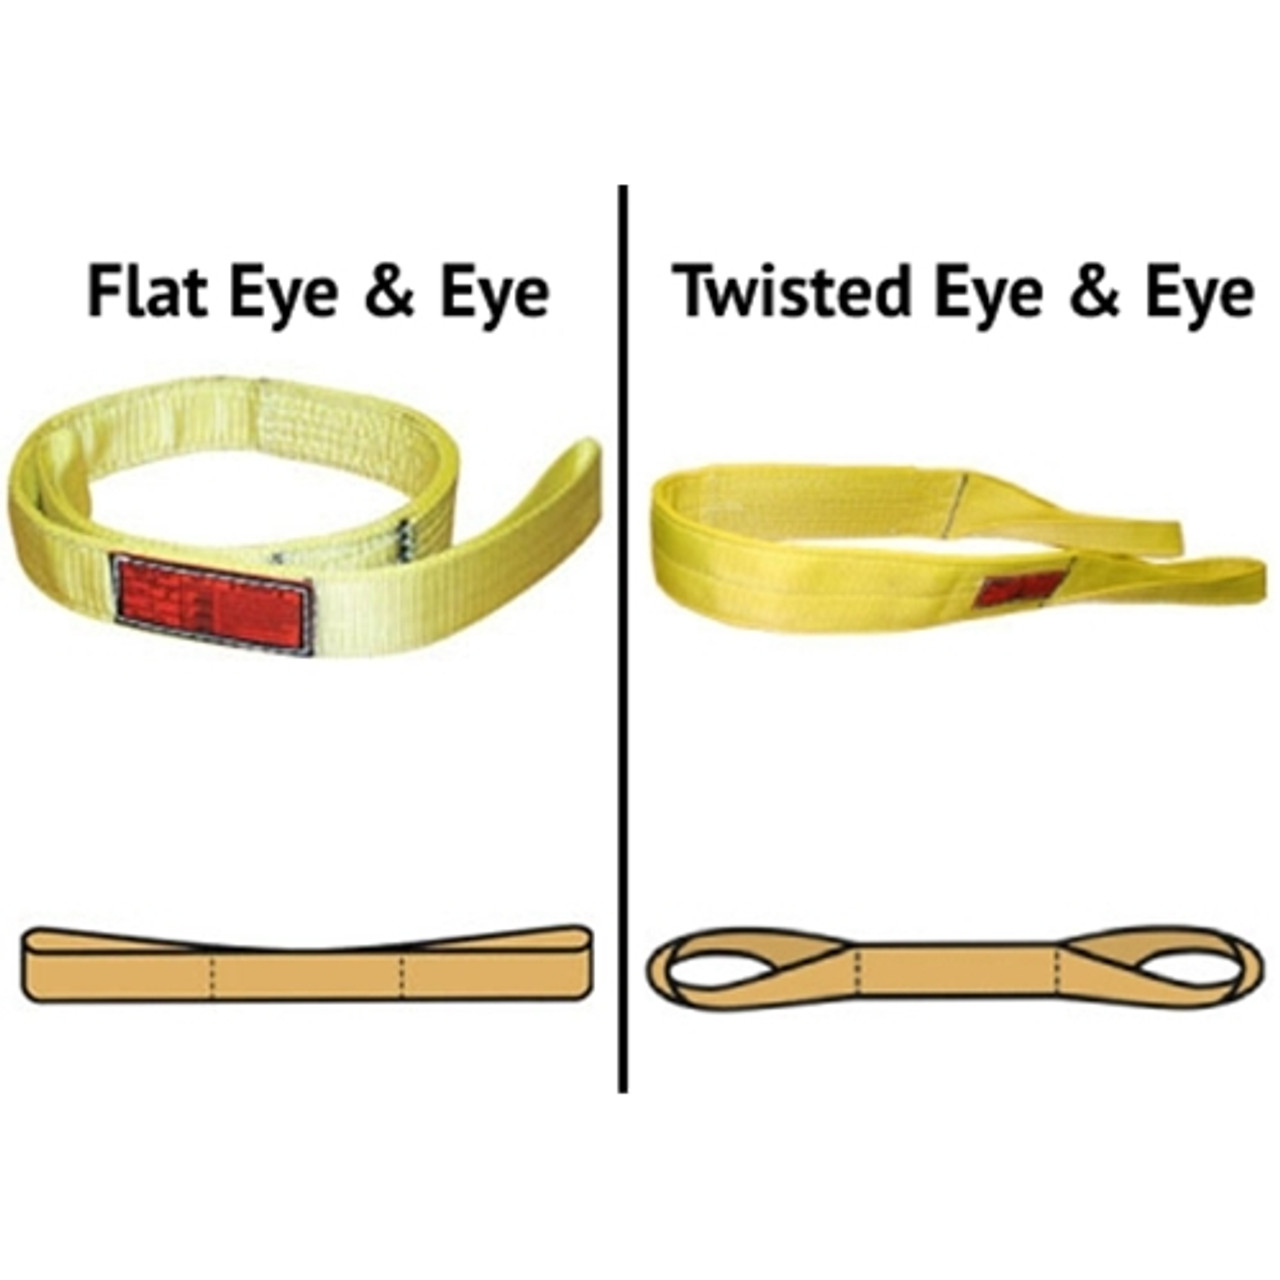 Stren-Flex 4,100 lb, Eye & Eye Nylon Sling, Flat or Twisted Eye, 3